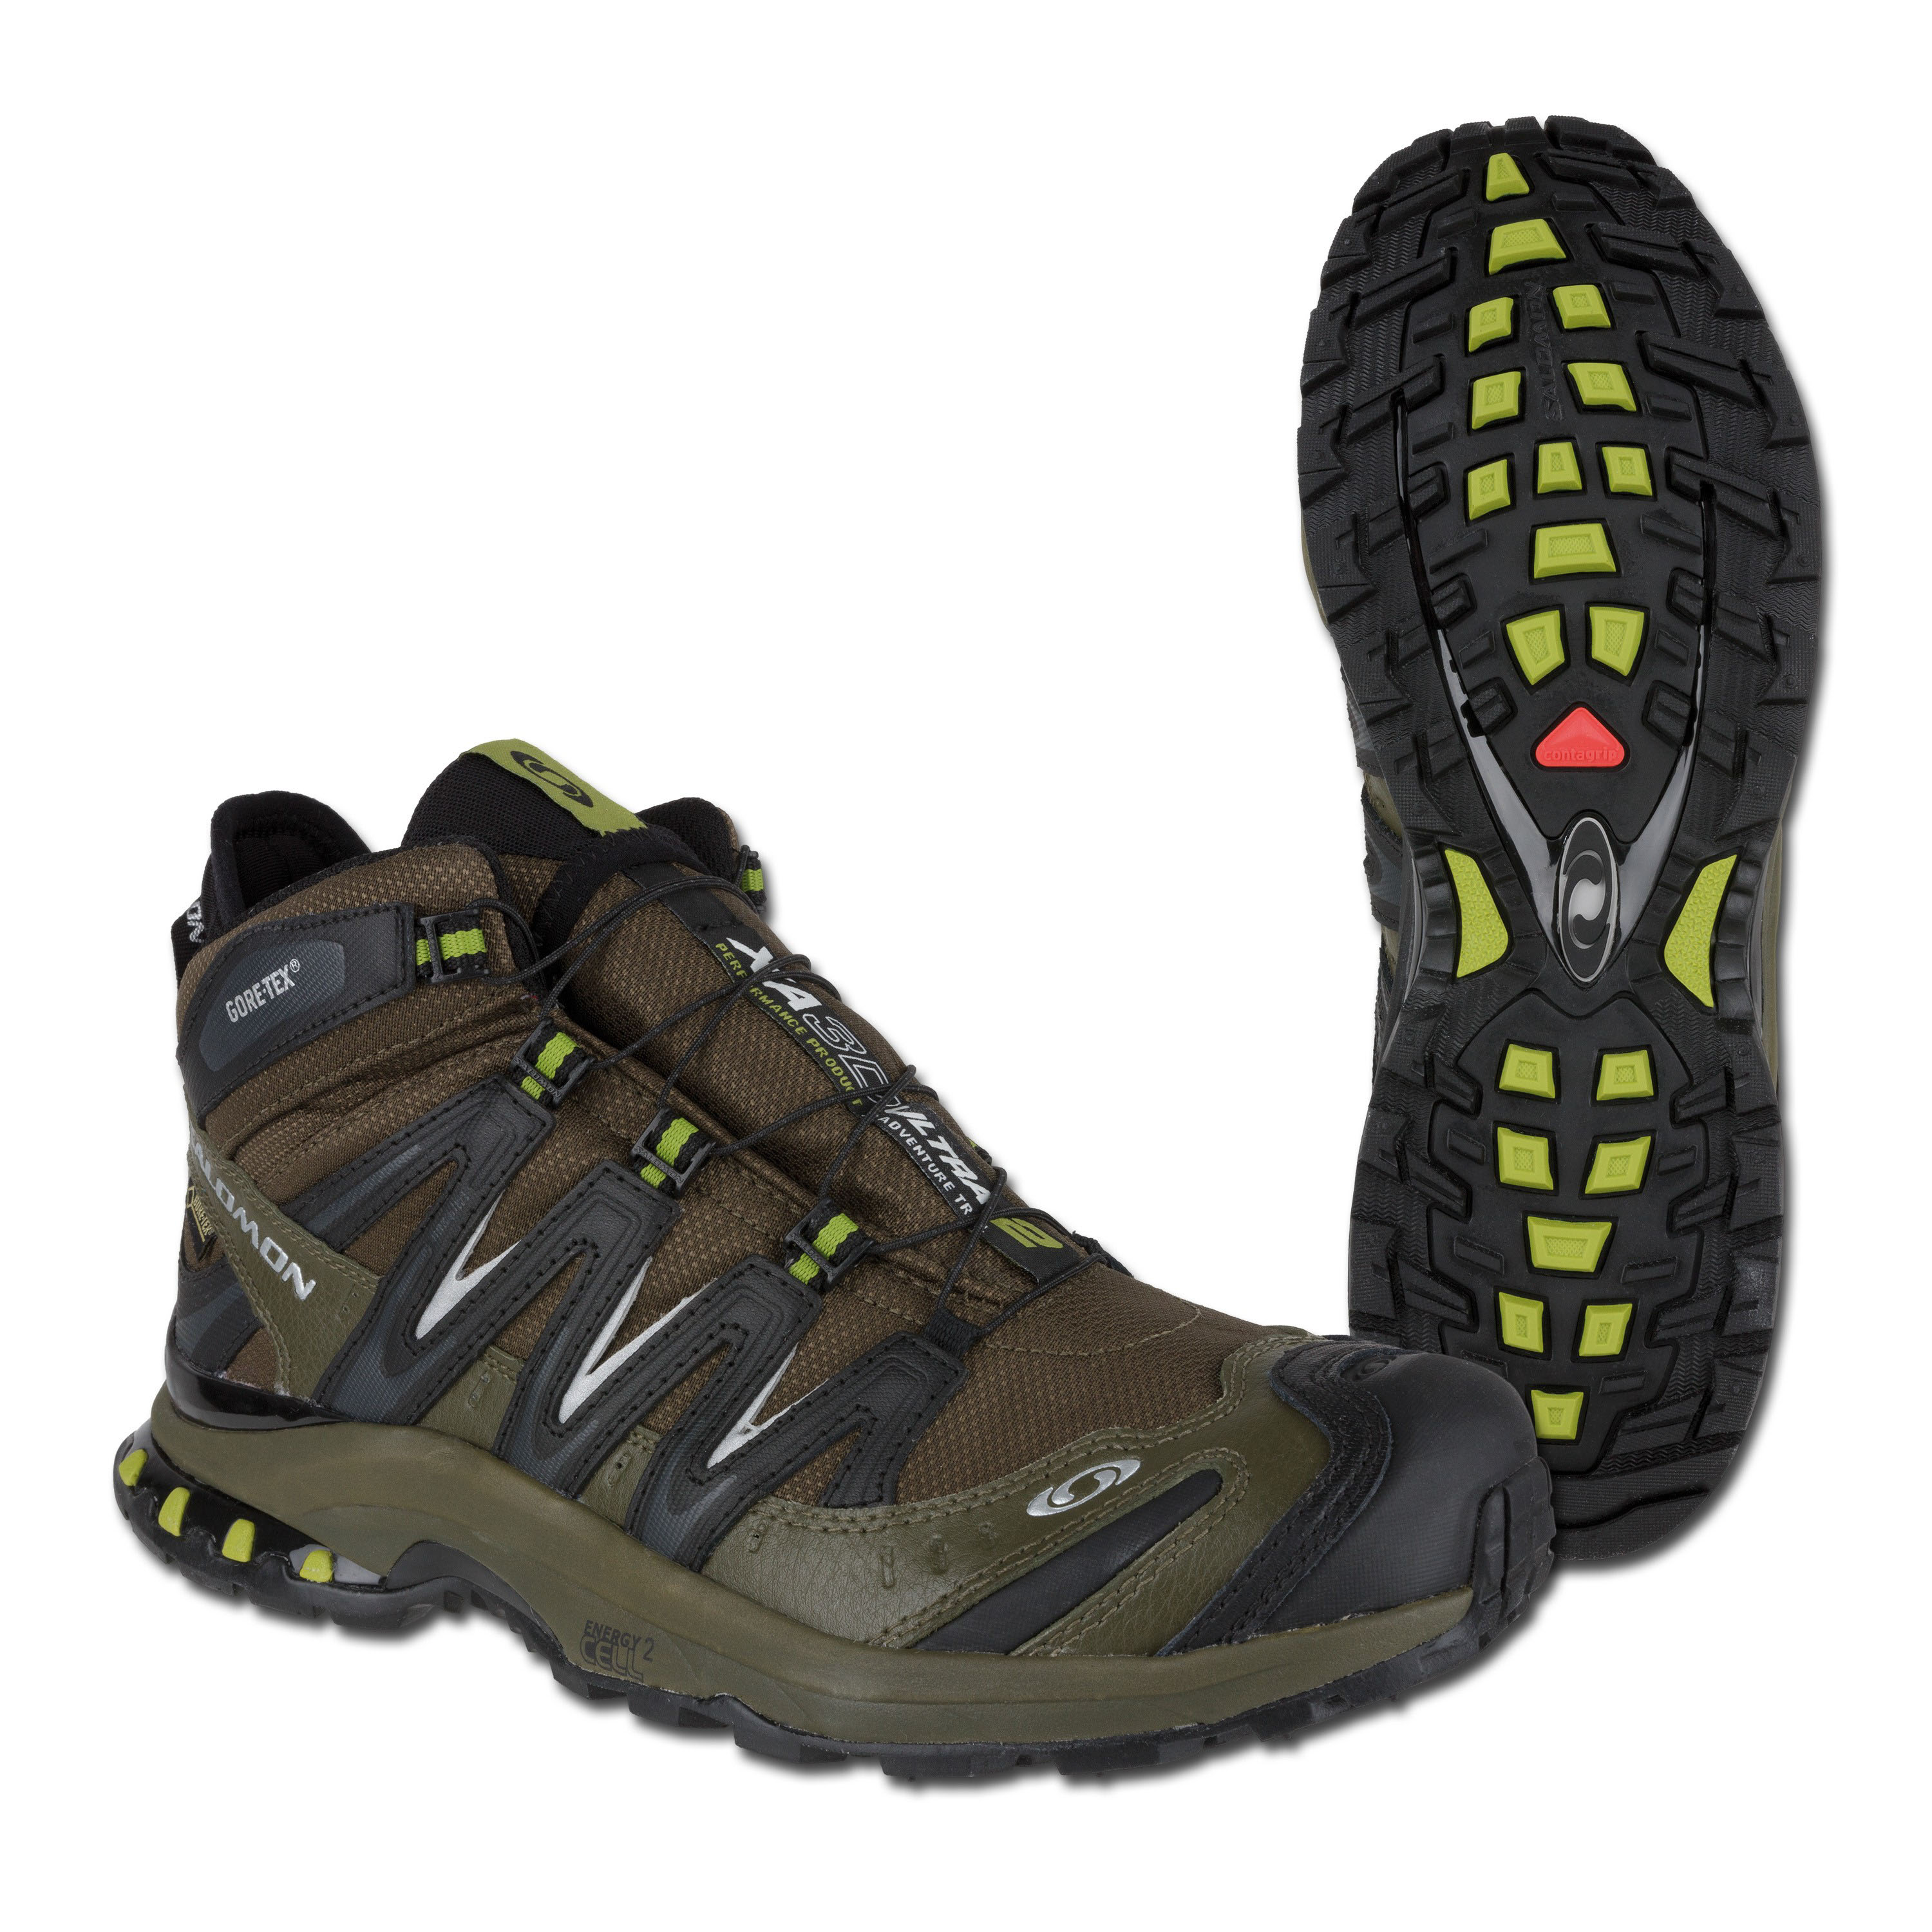 Salomon Shoe XA Pro 3D Mid GTX Bayou Green | Salomon Shoe XA Pro 3D Mid LTR GTX Bayou Green | Hiking Shoes | Shoes | Footwear | Clothing